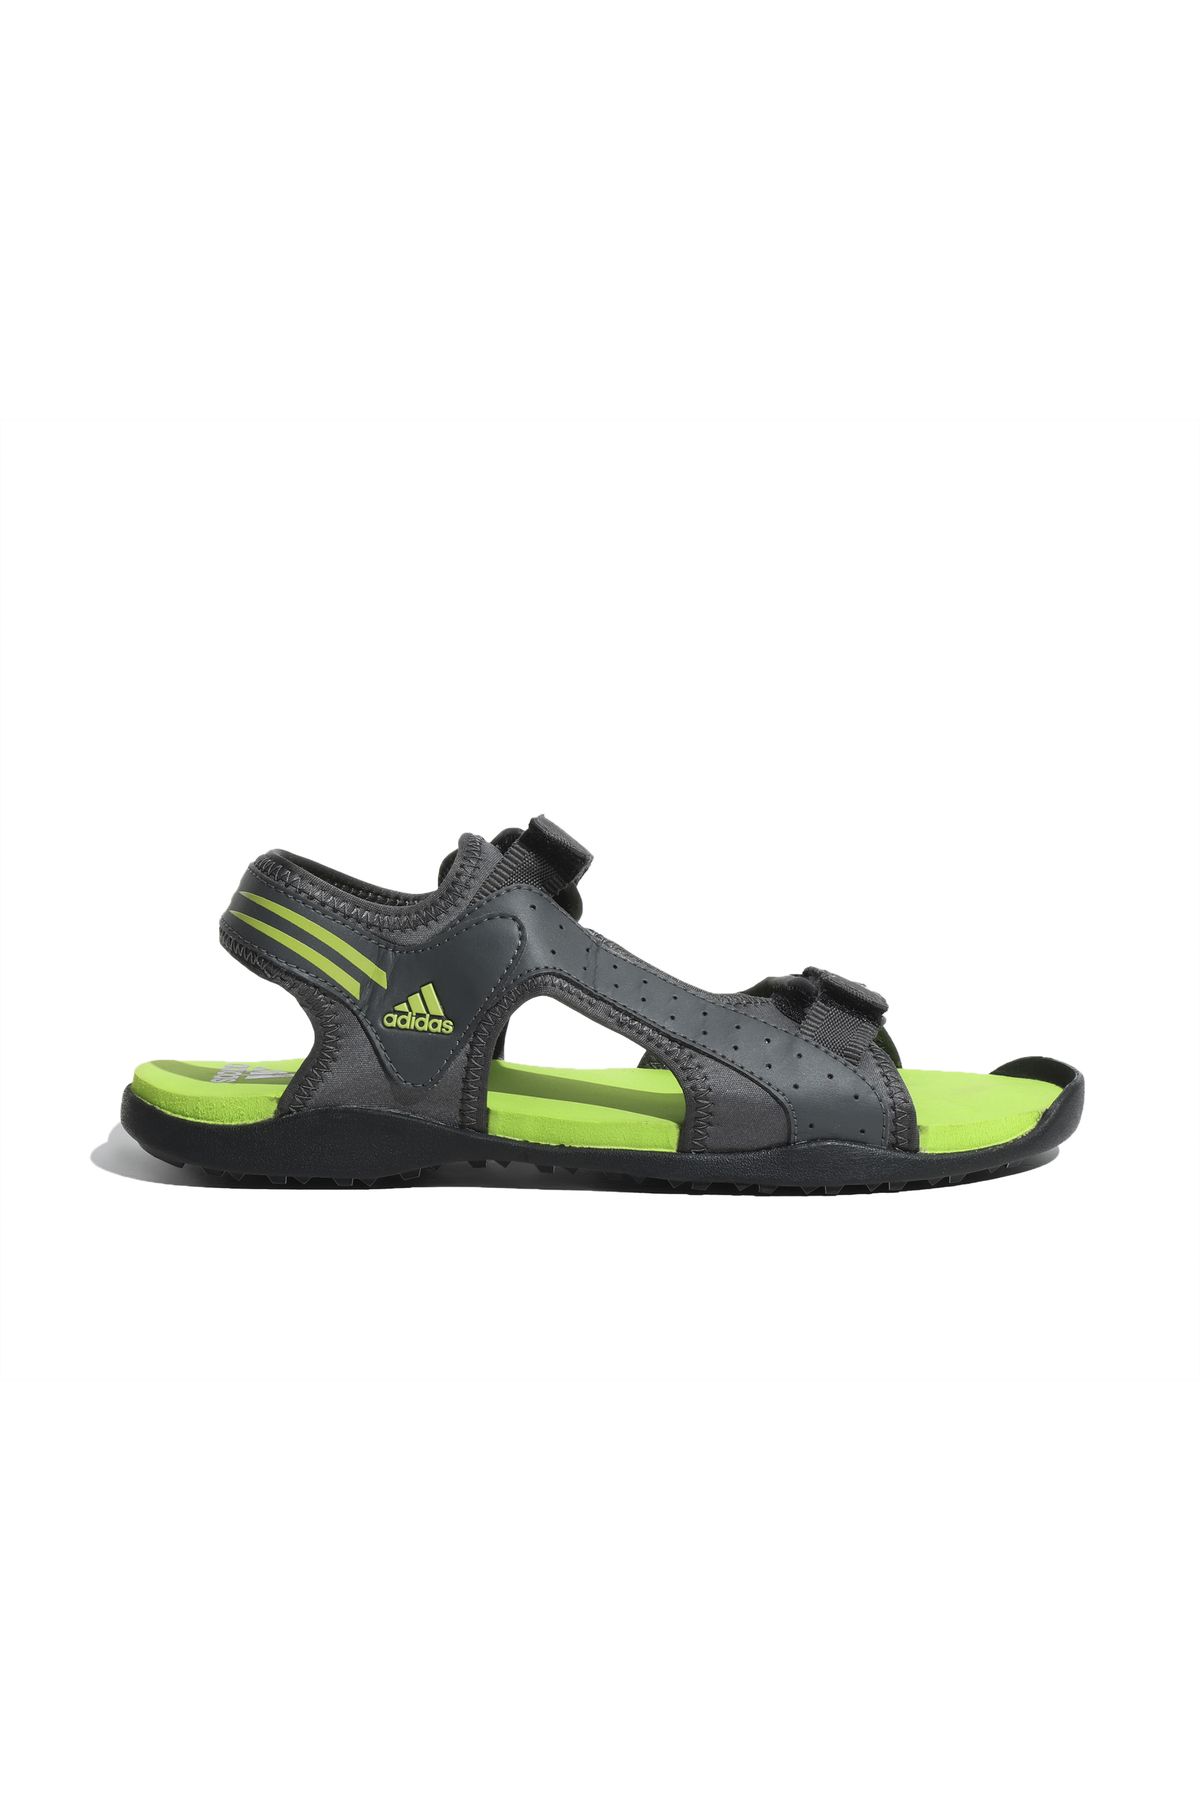 adidas Alpinoz M Günlük Rahat Taban Sandalet